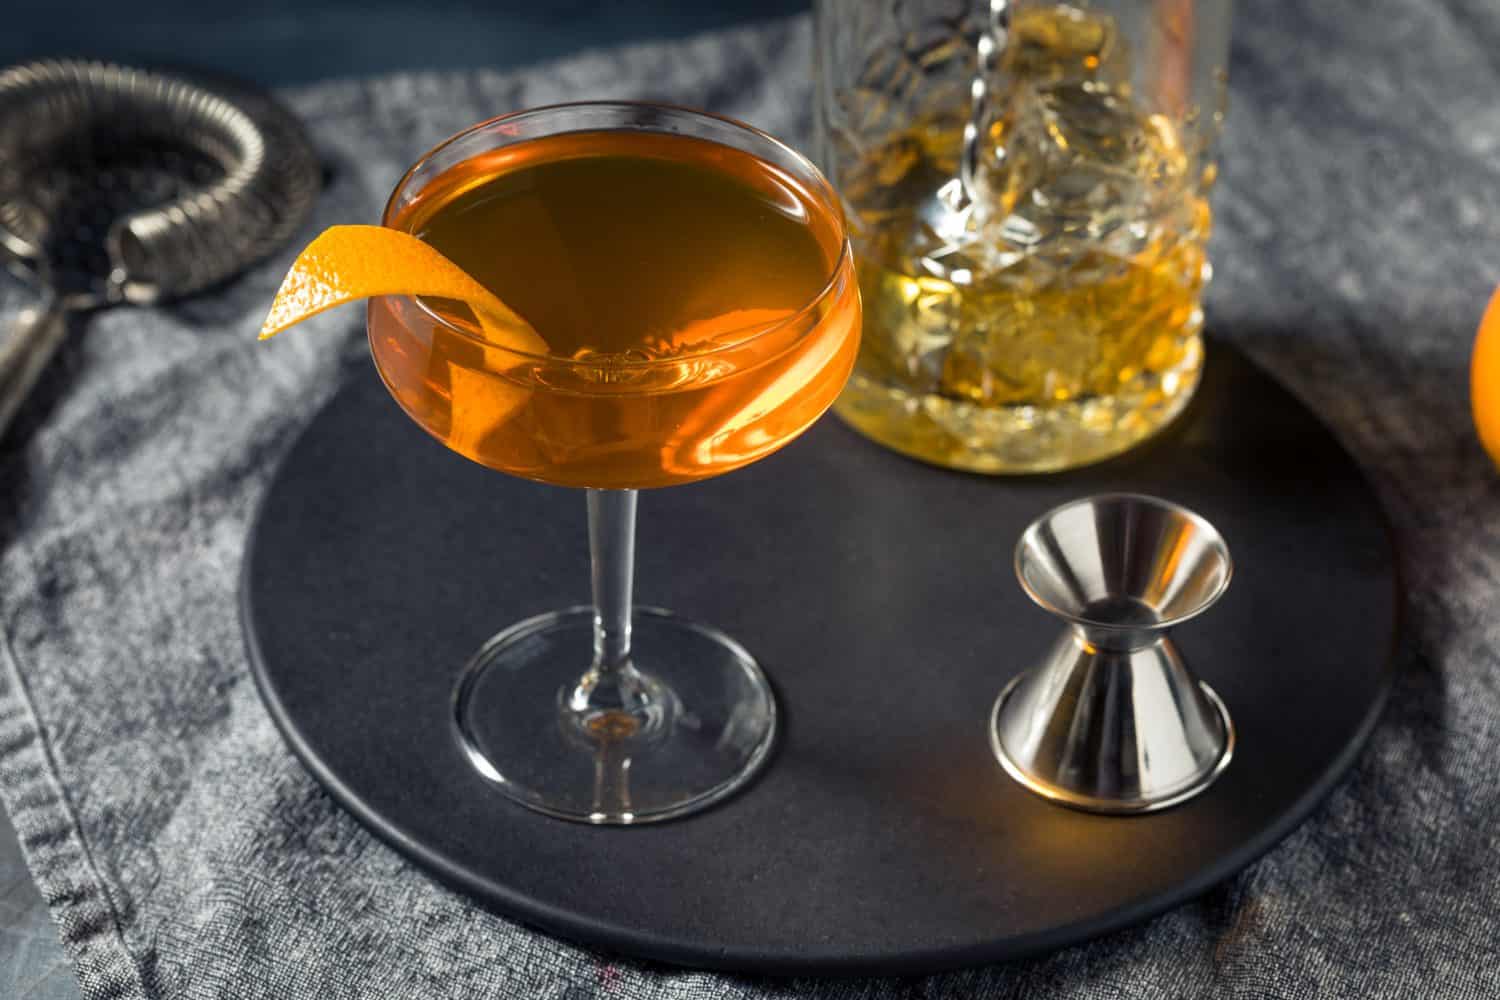 Cold Refreshing Boozy Irish Blonde Whiskey Cocktail with Orange and Sherry